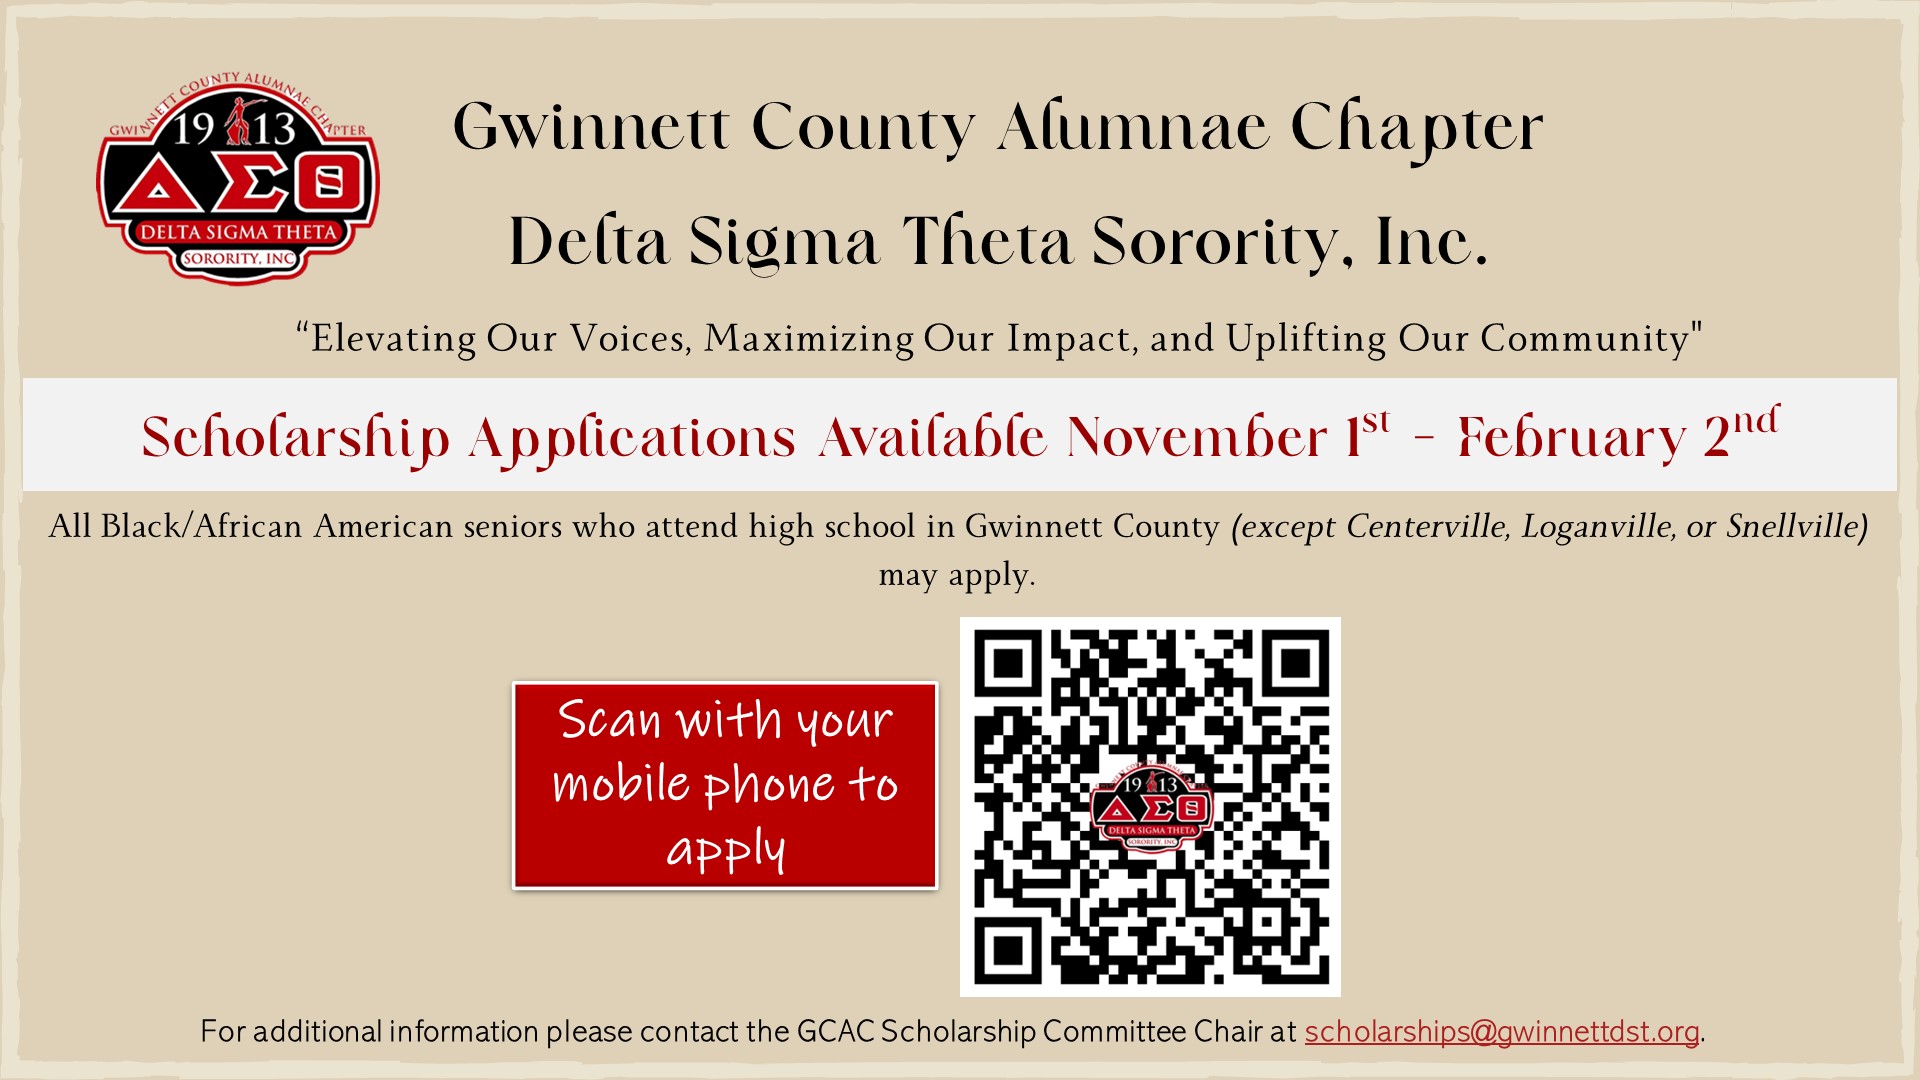 Collin County Alumnae Chapter - Delta Sigma Theta Sorority, Inc.